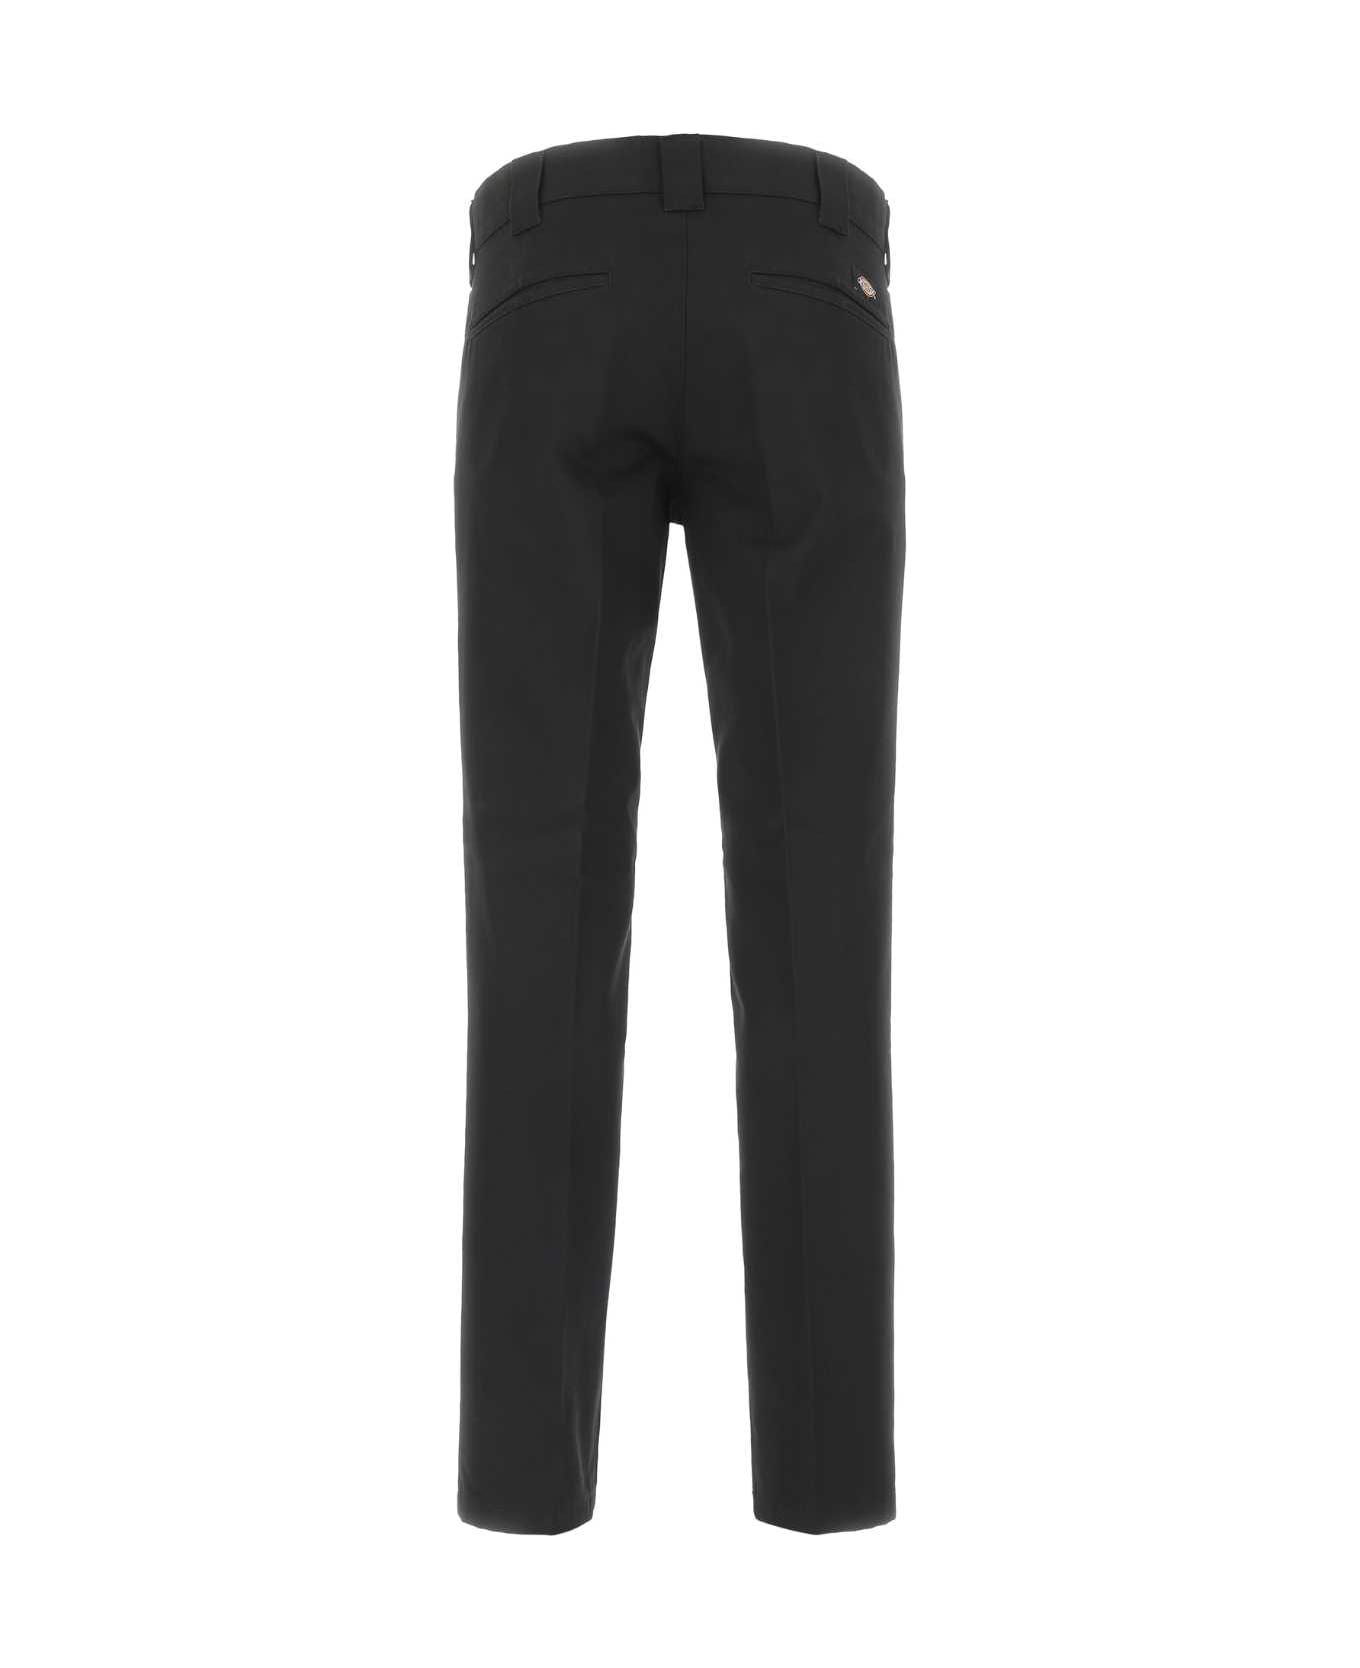 Dickies Black Polyester Blend Pant - BLK1